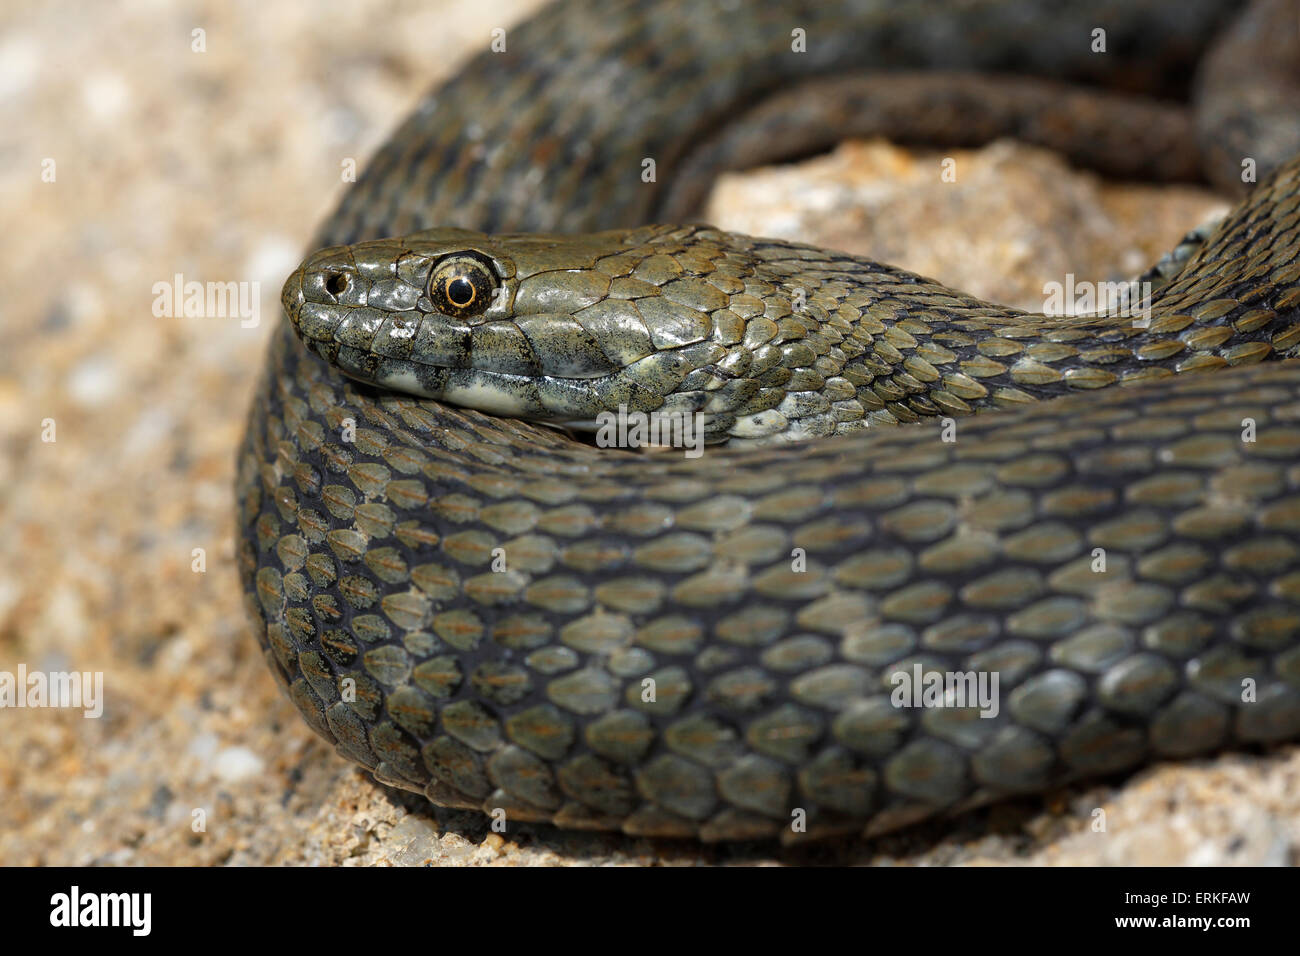 Dice Snake (Natrix tessellata) basking on stone, Hungary Stock Photo